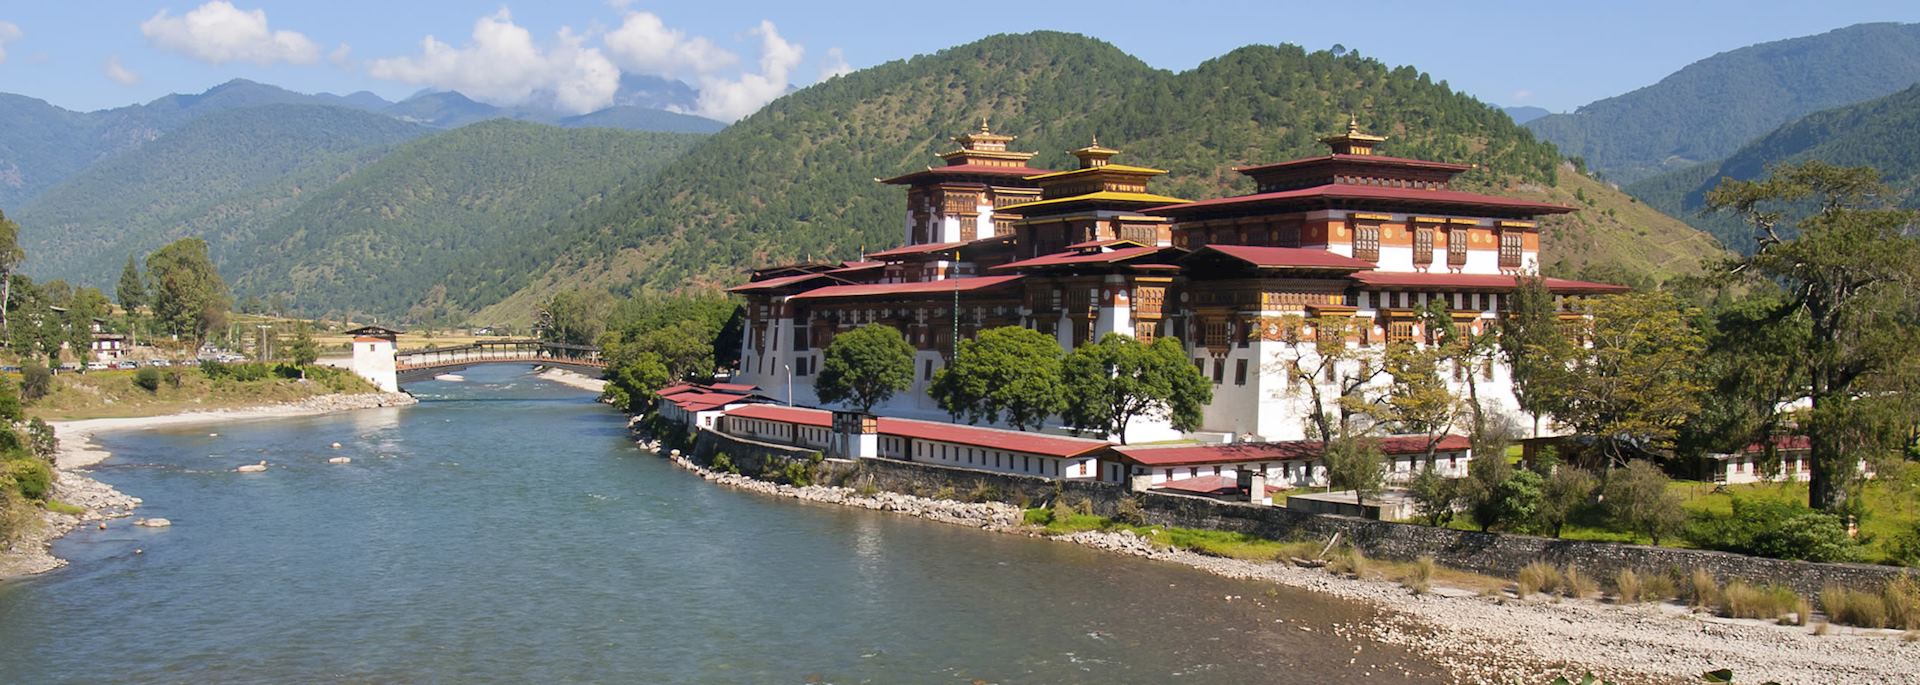 Punakha Dzong and the Mo Chhu River